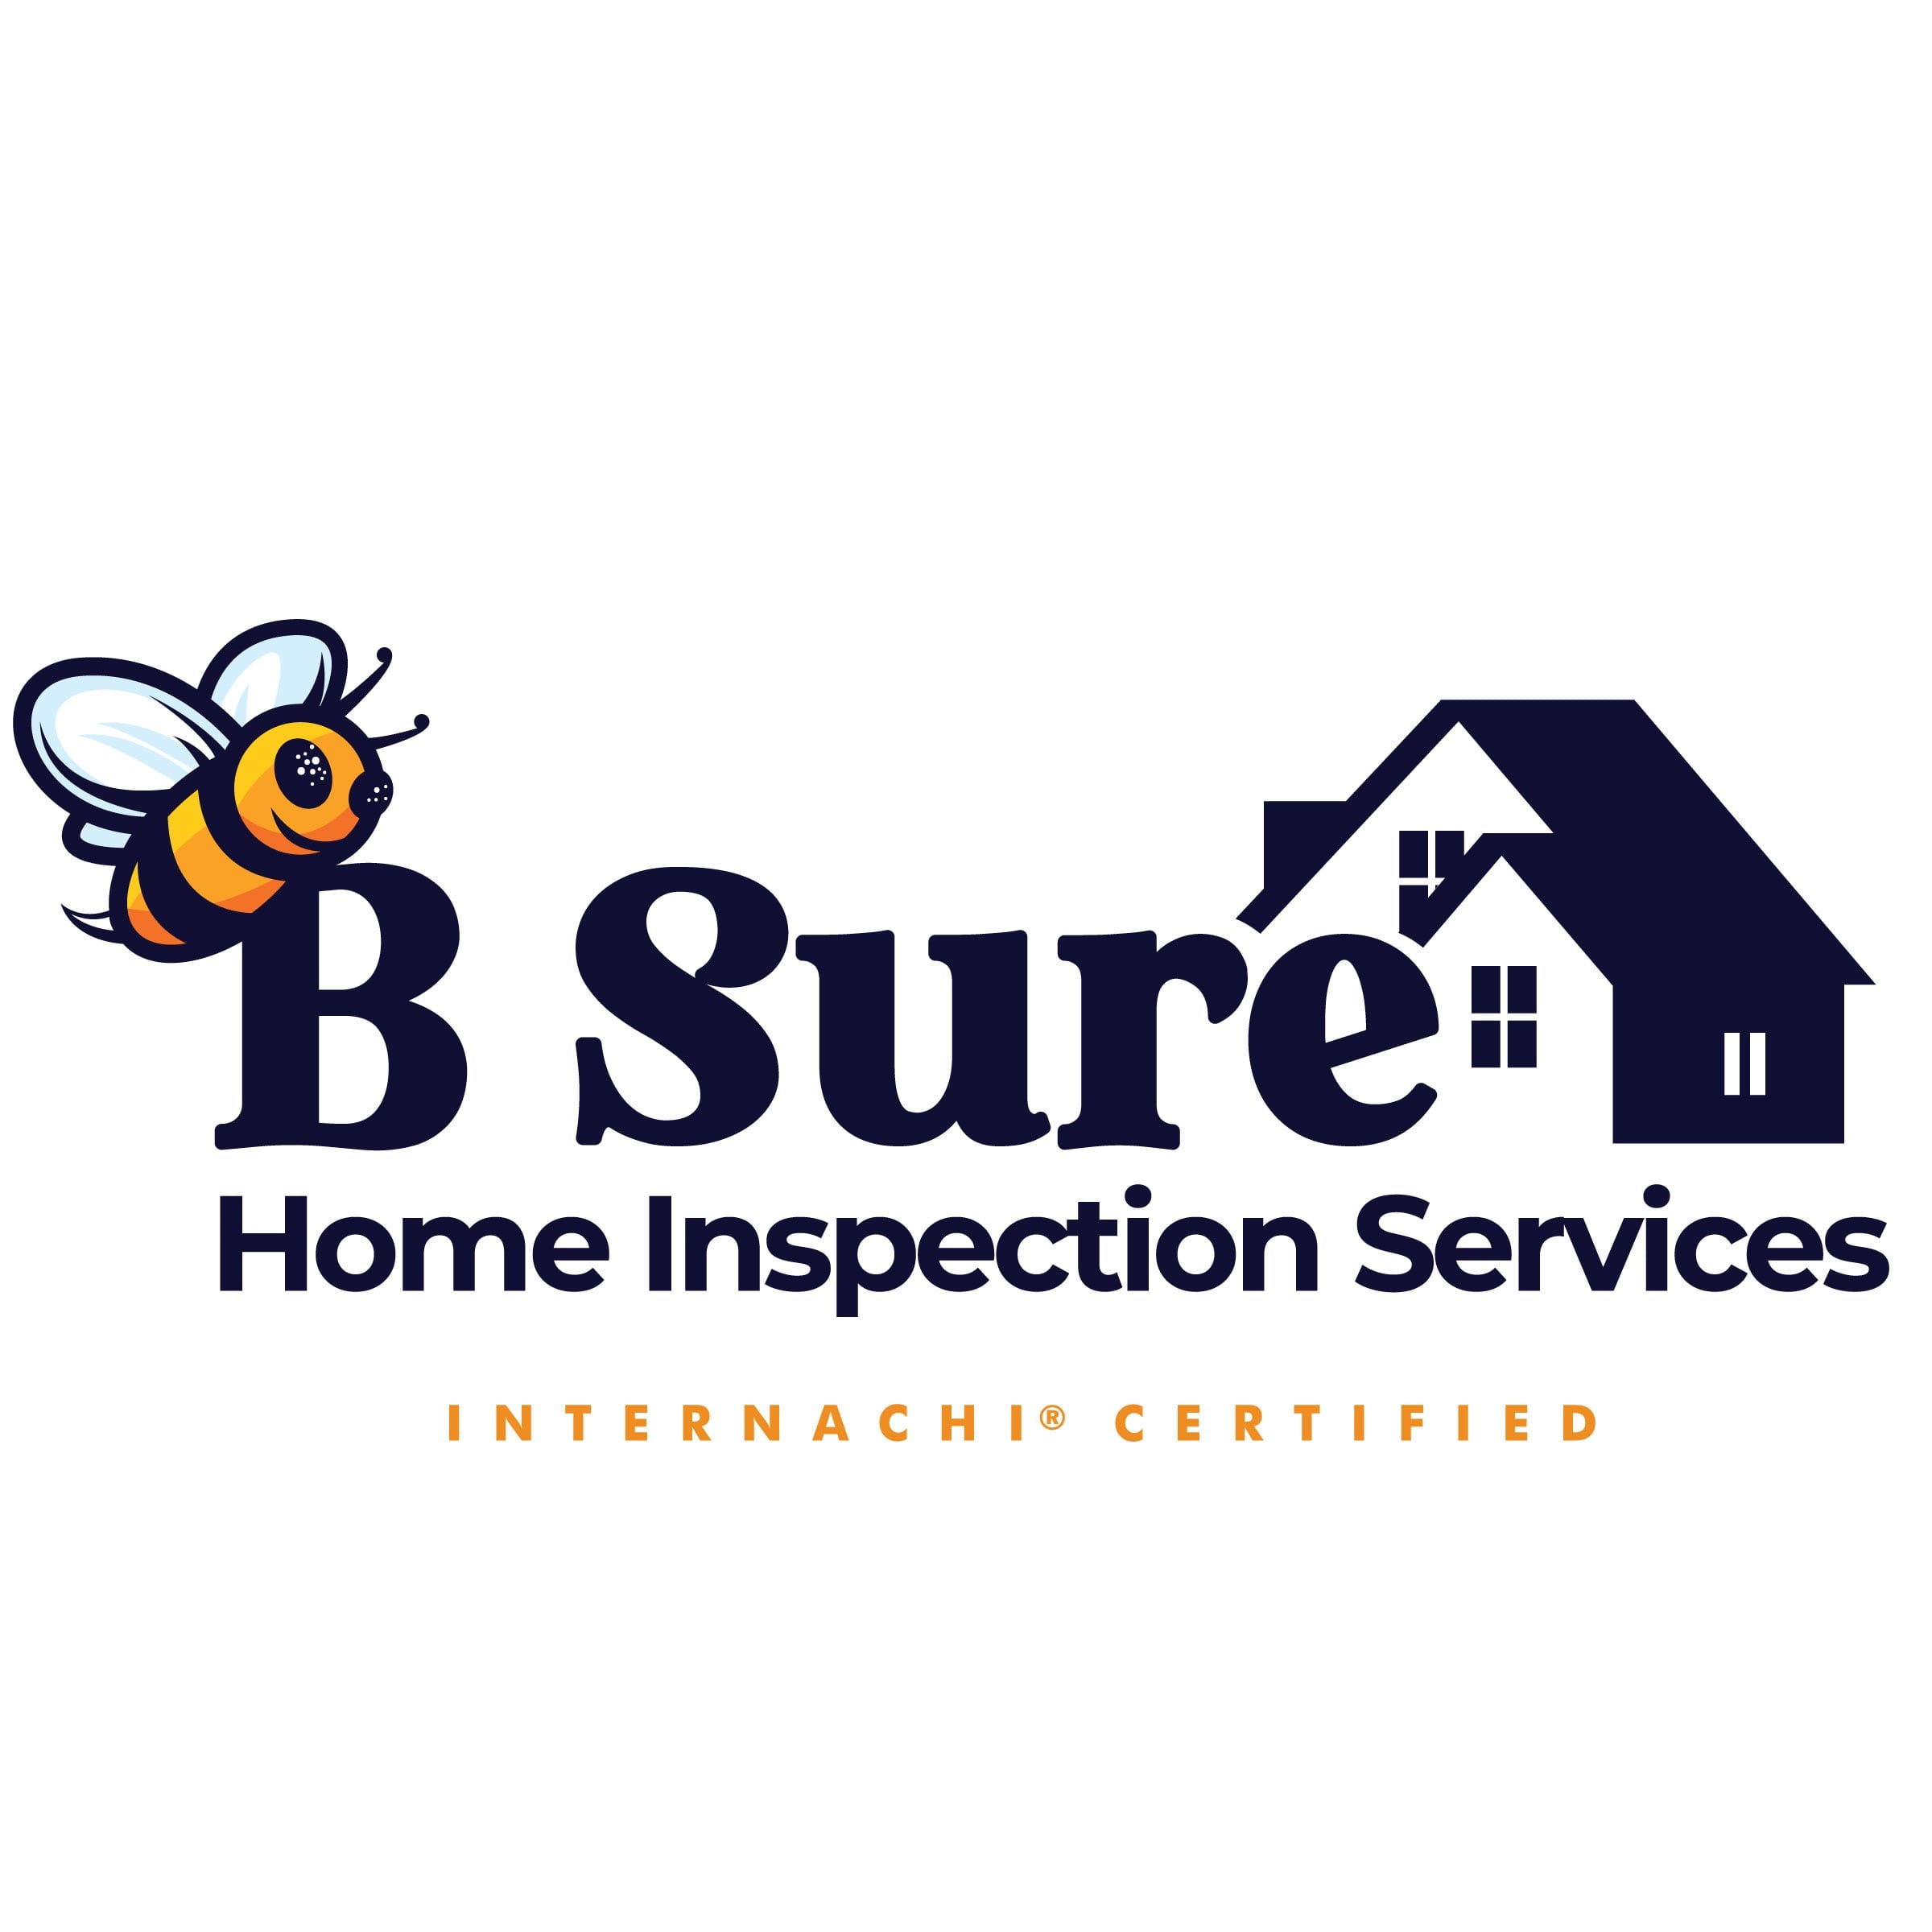 B Sure Home Inspection Services LLC Logo